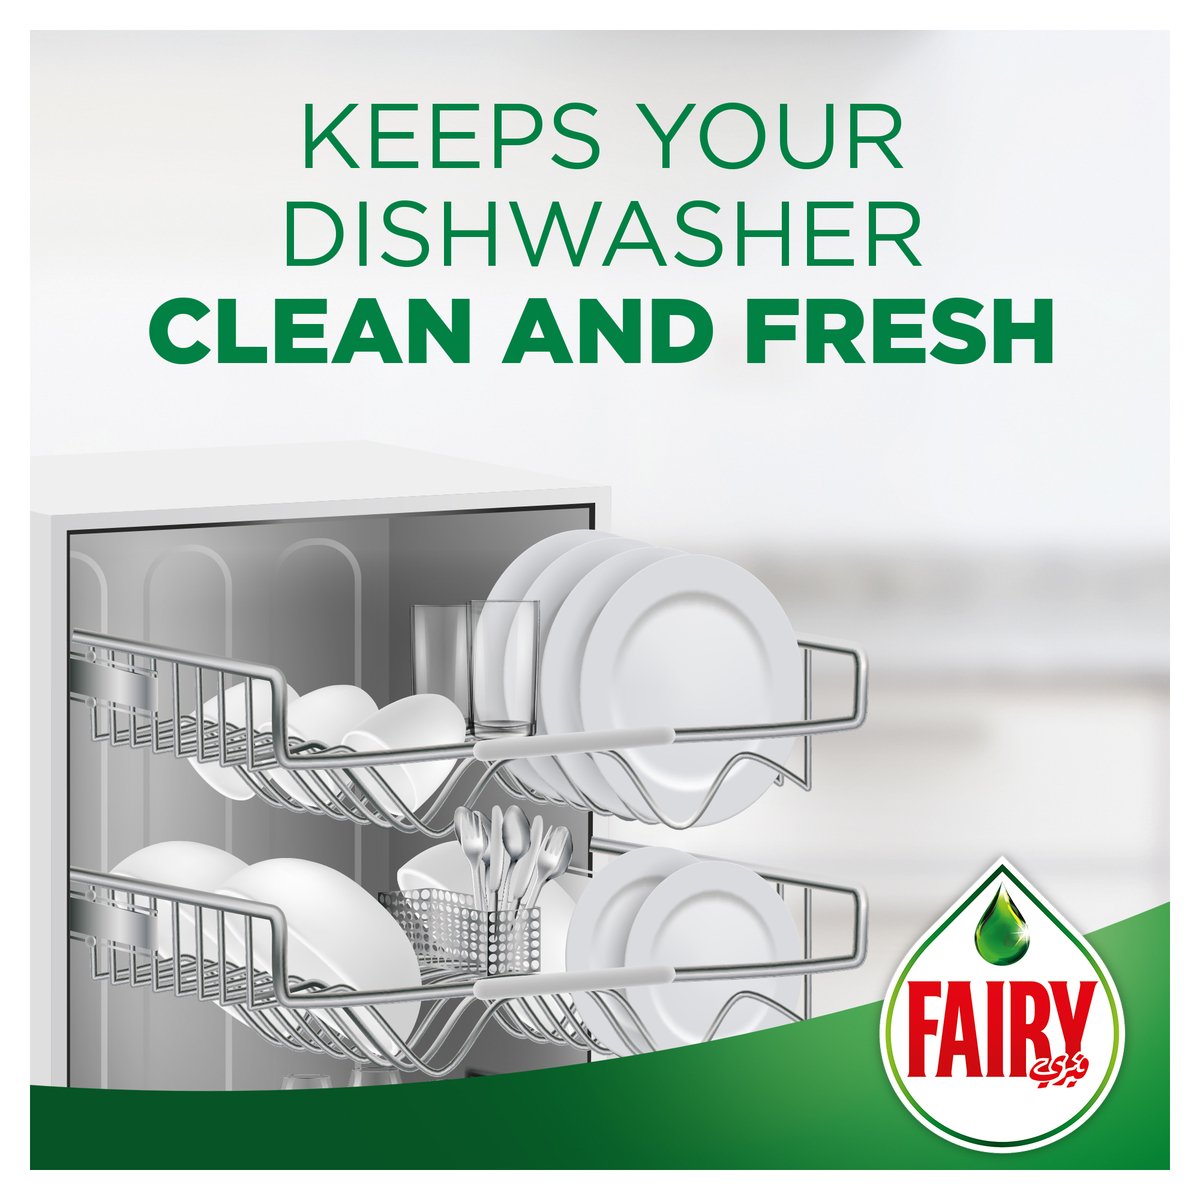 Fairy Dishwasher Detergent Tablets All in One Lemon 54pcs + 16pcs